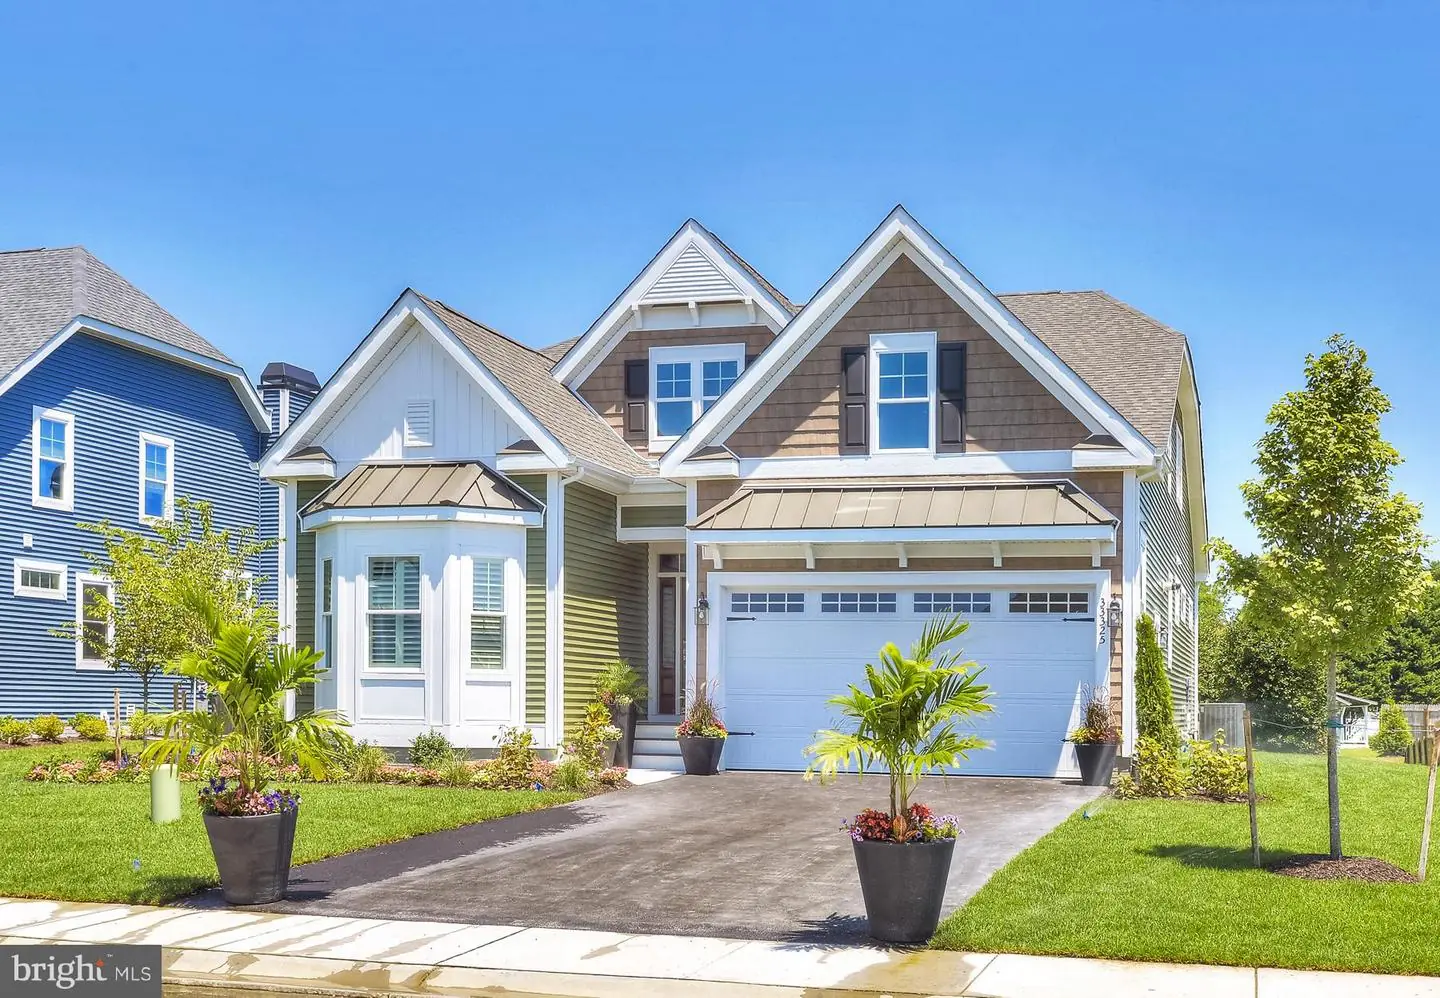 DESU2031076-801956180356-2024-01-30-16-56-09 Bluebell To-be-built Home Tbd | Millsboro, DE Real Estate For Sale | MLS# Desu2031076  - Lisa Mathena Real Estate